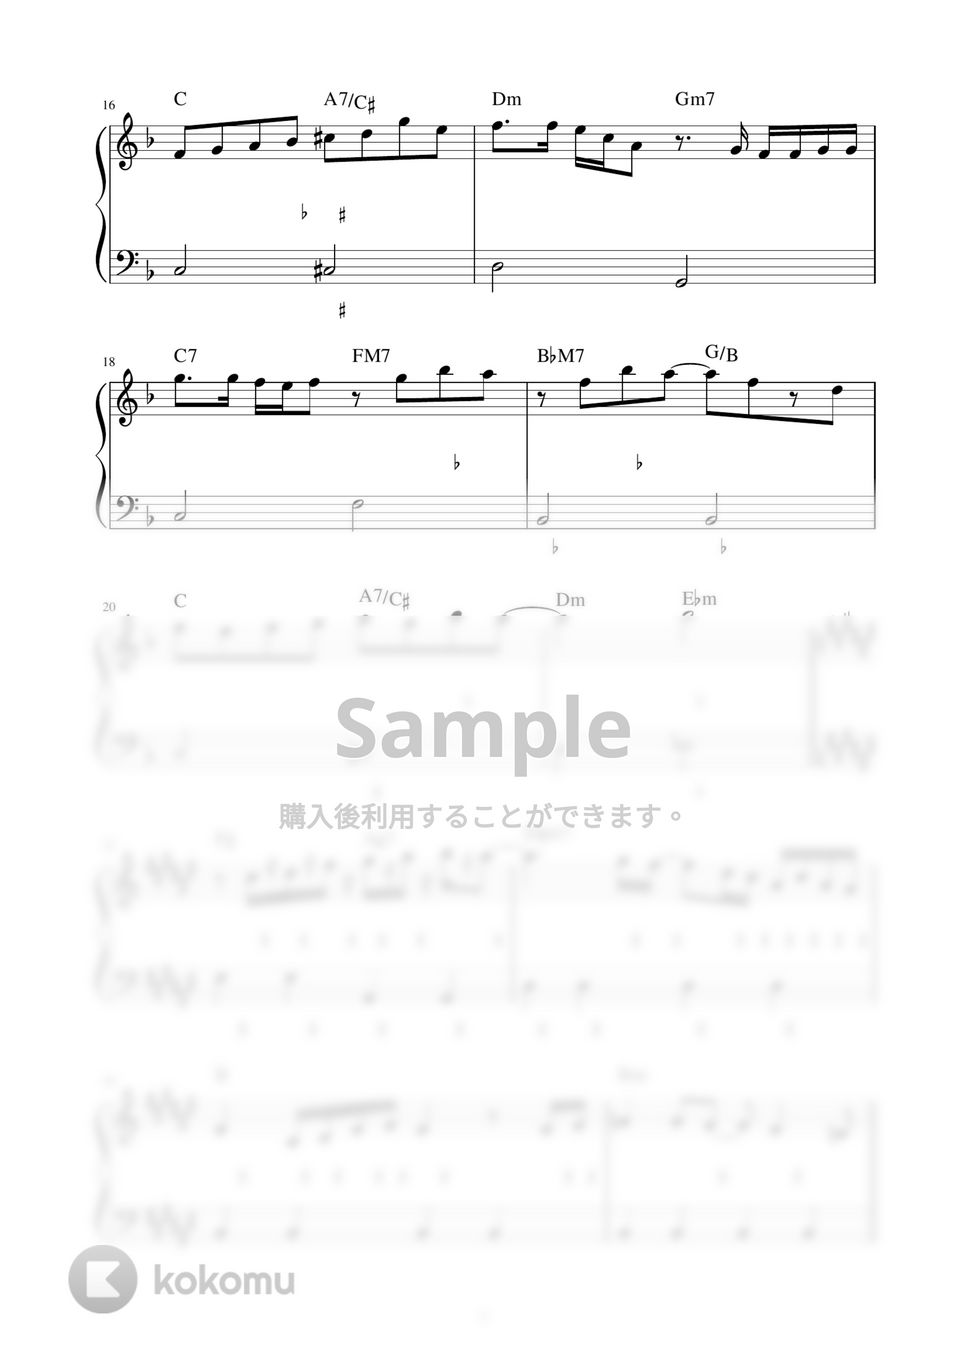 King Gnu - 逆夢 (ピアノ楽譜 / かんたん両手 / 歌詞付き / ドレミ付き / 初心者向き) by piano.tokyo